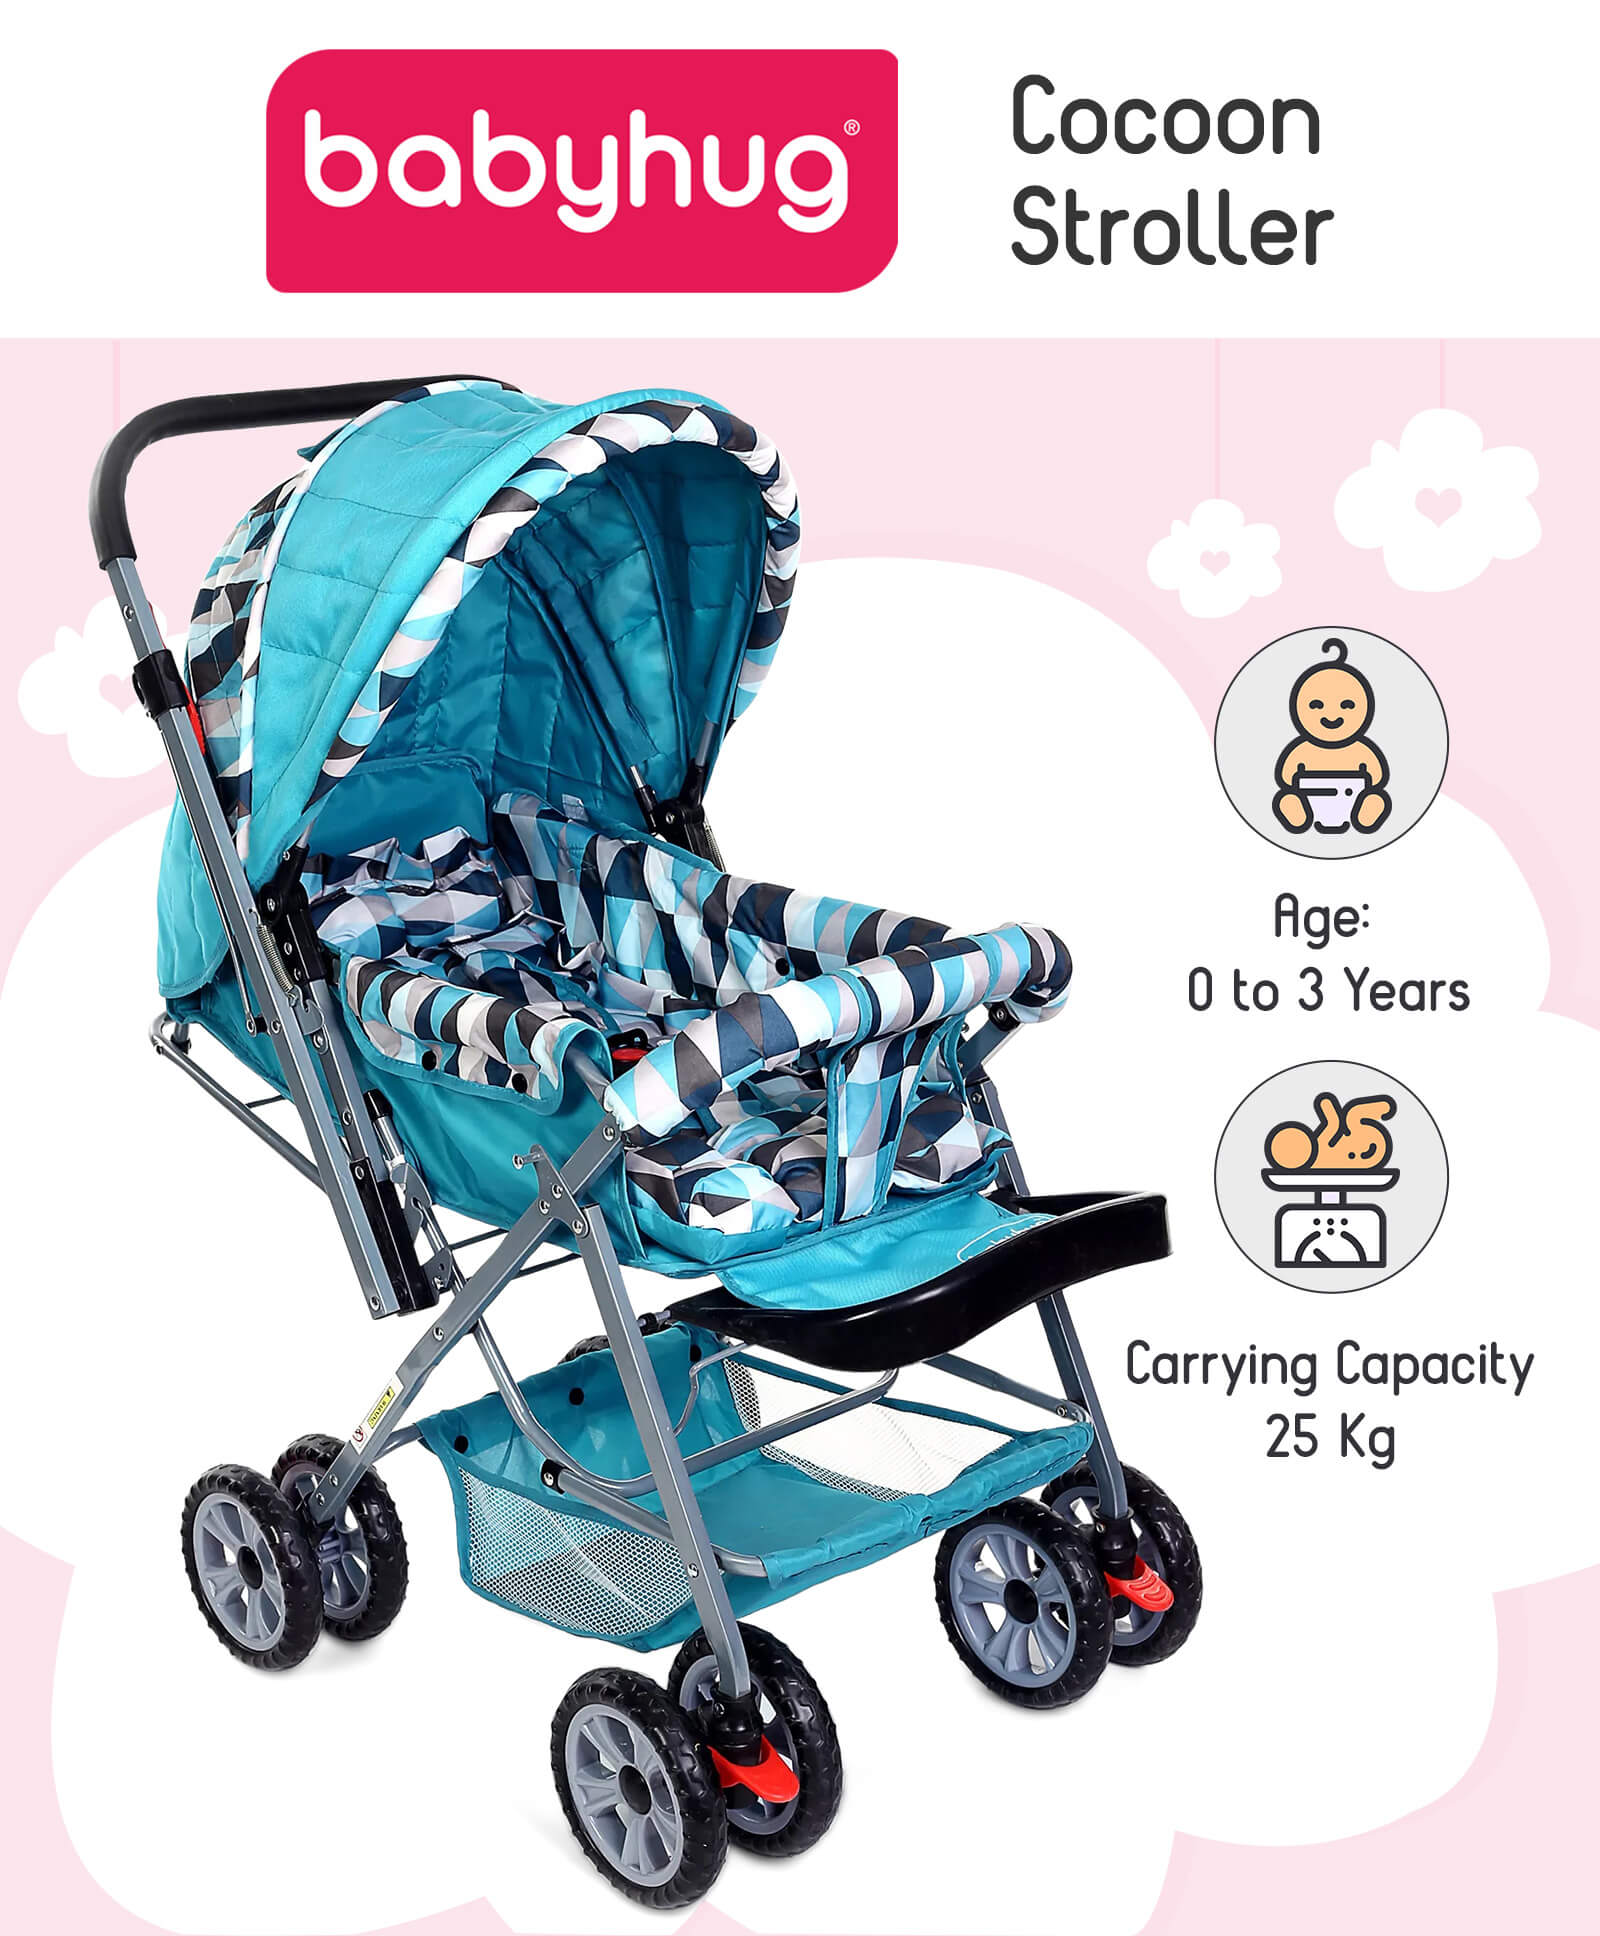 baby hug stroller price